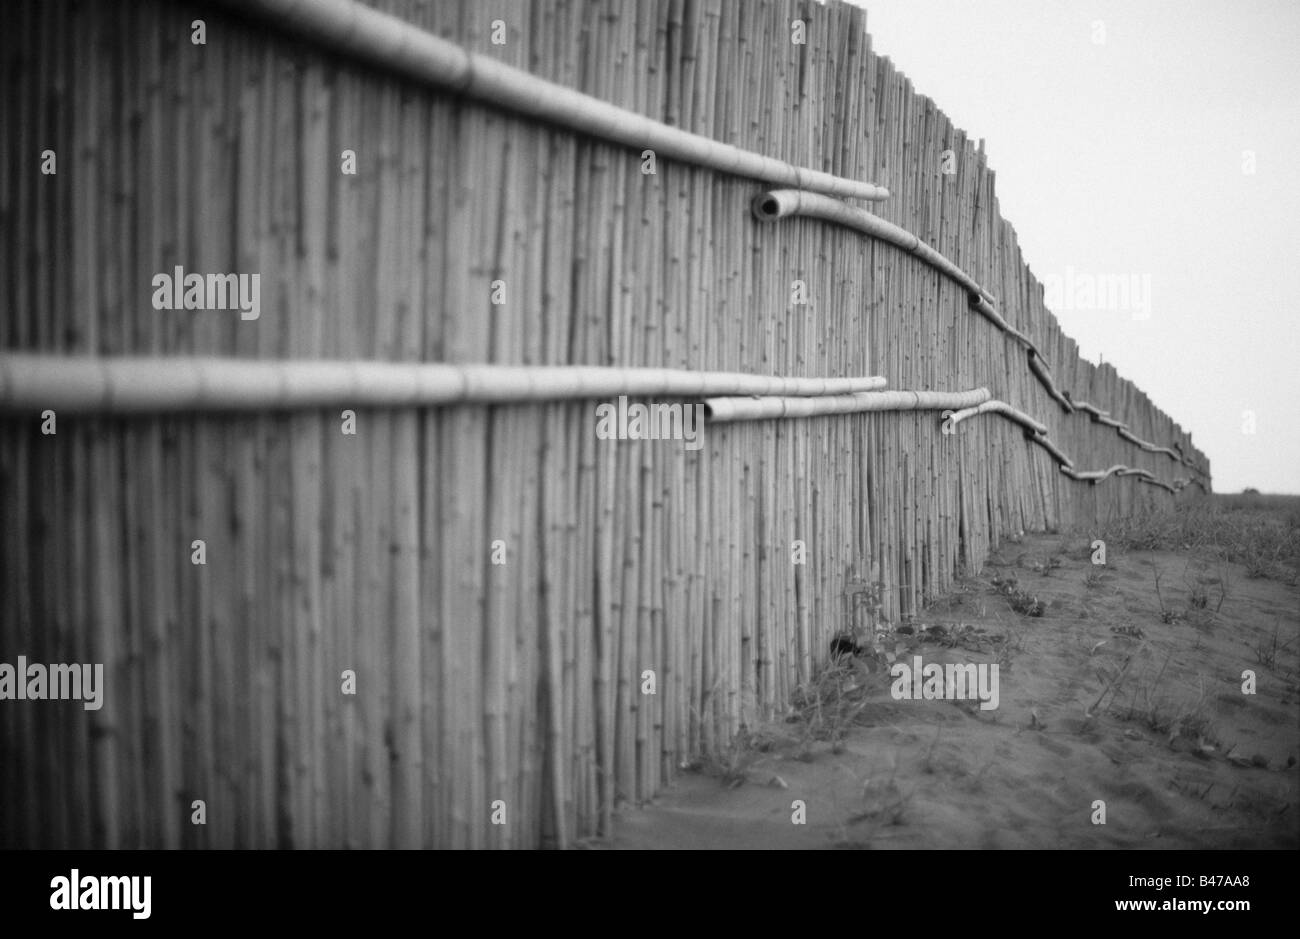 Bamboo wall extending down a beach. Stock Photo